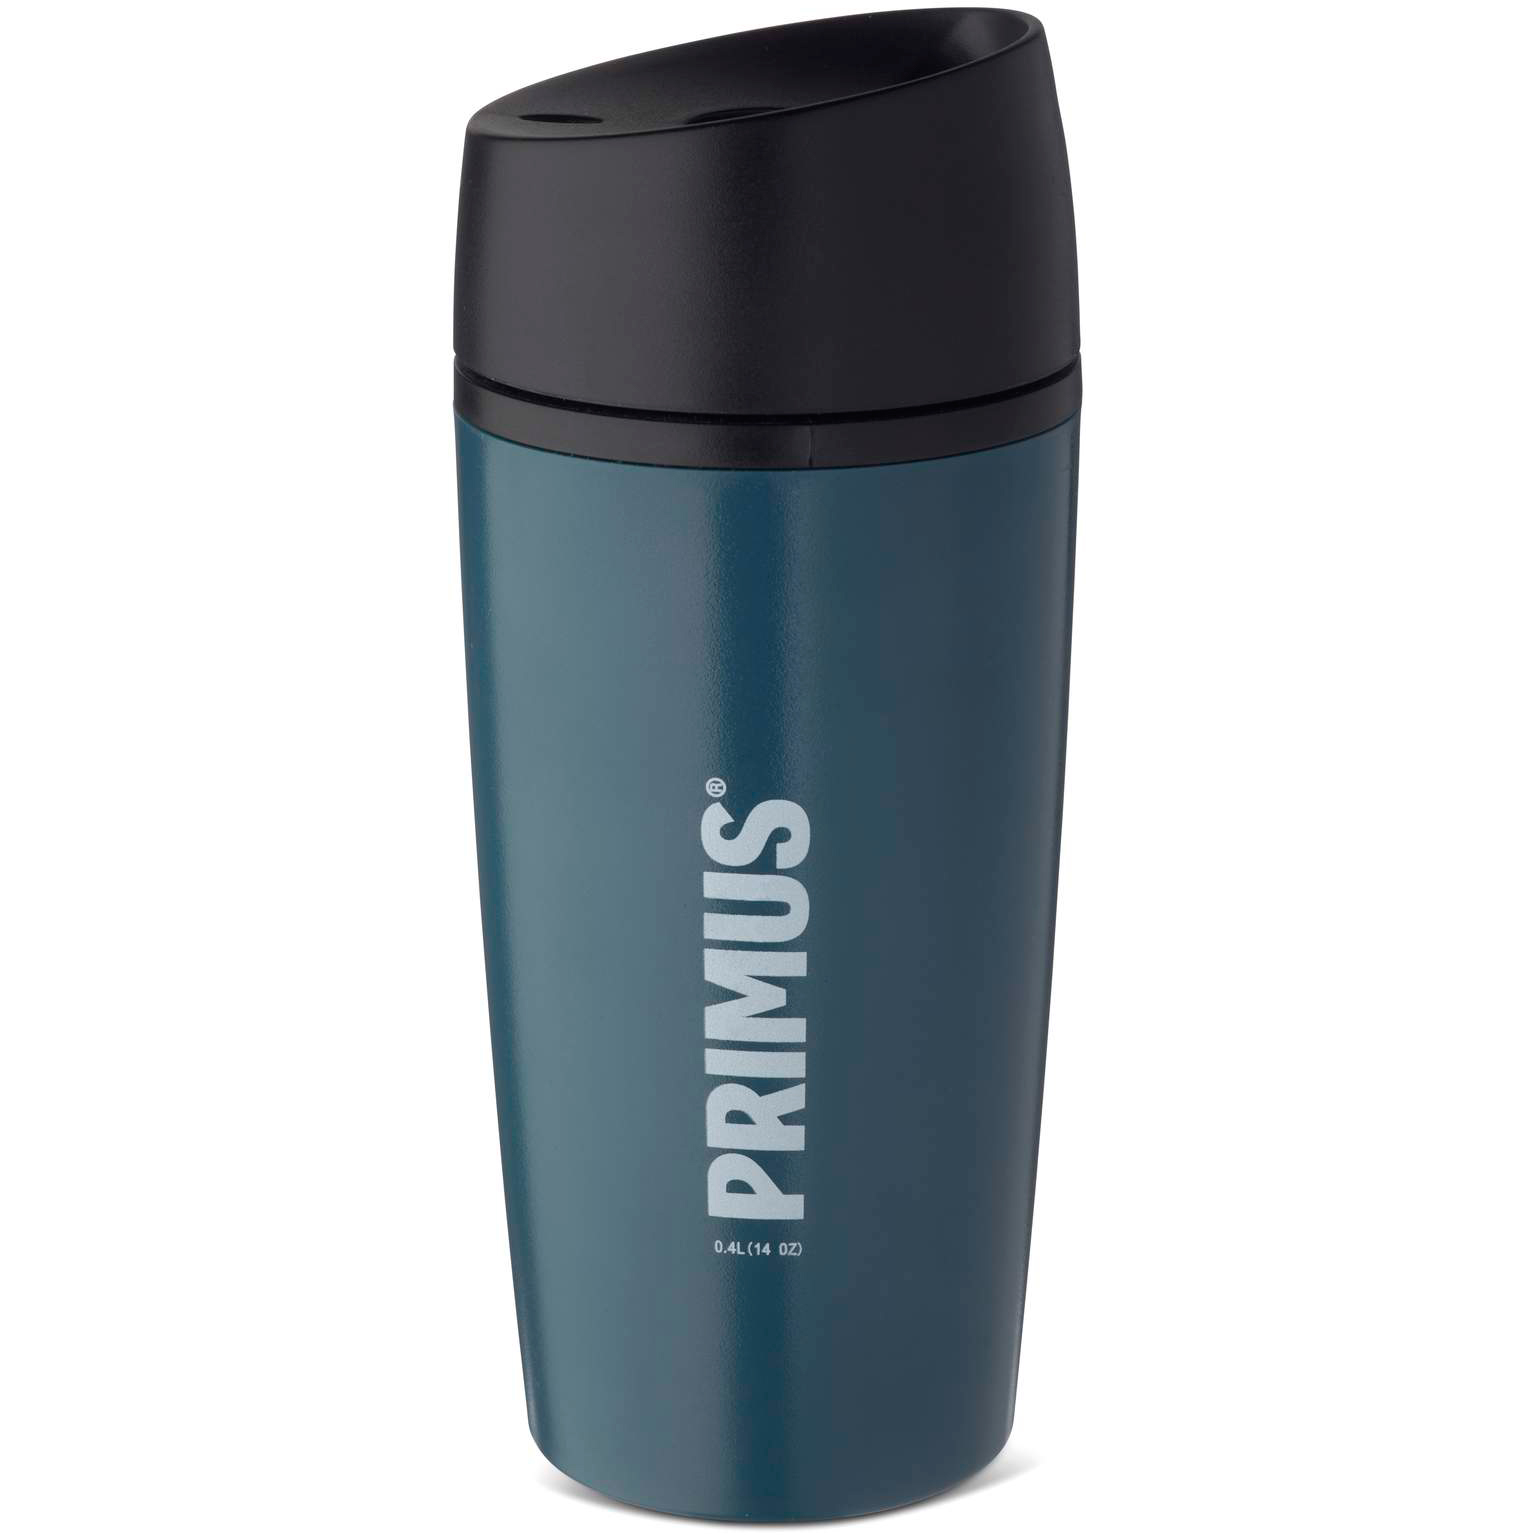 Productfoto van Primus Commuter Mug 0.4 Liter - deep blue